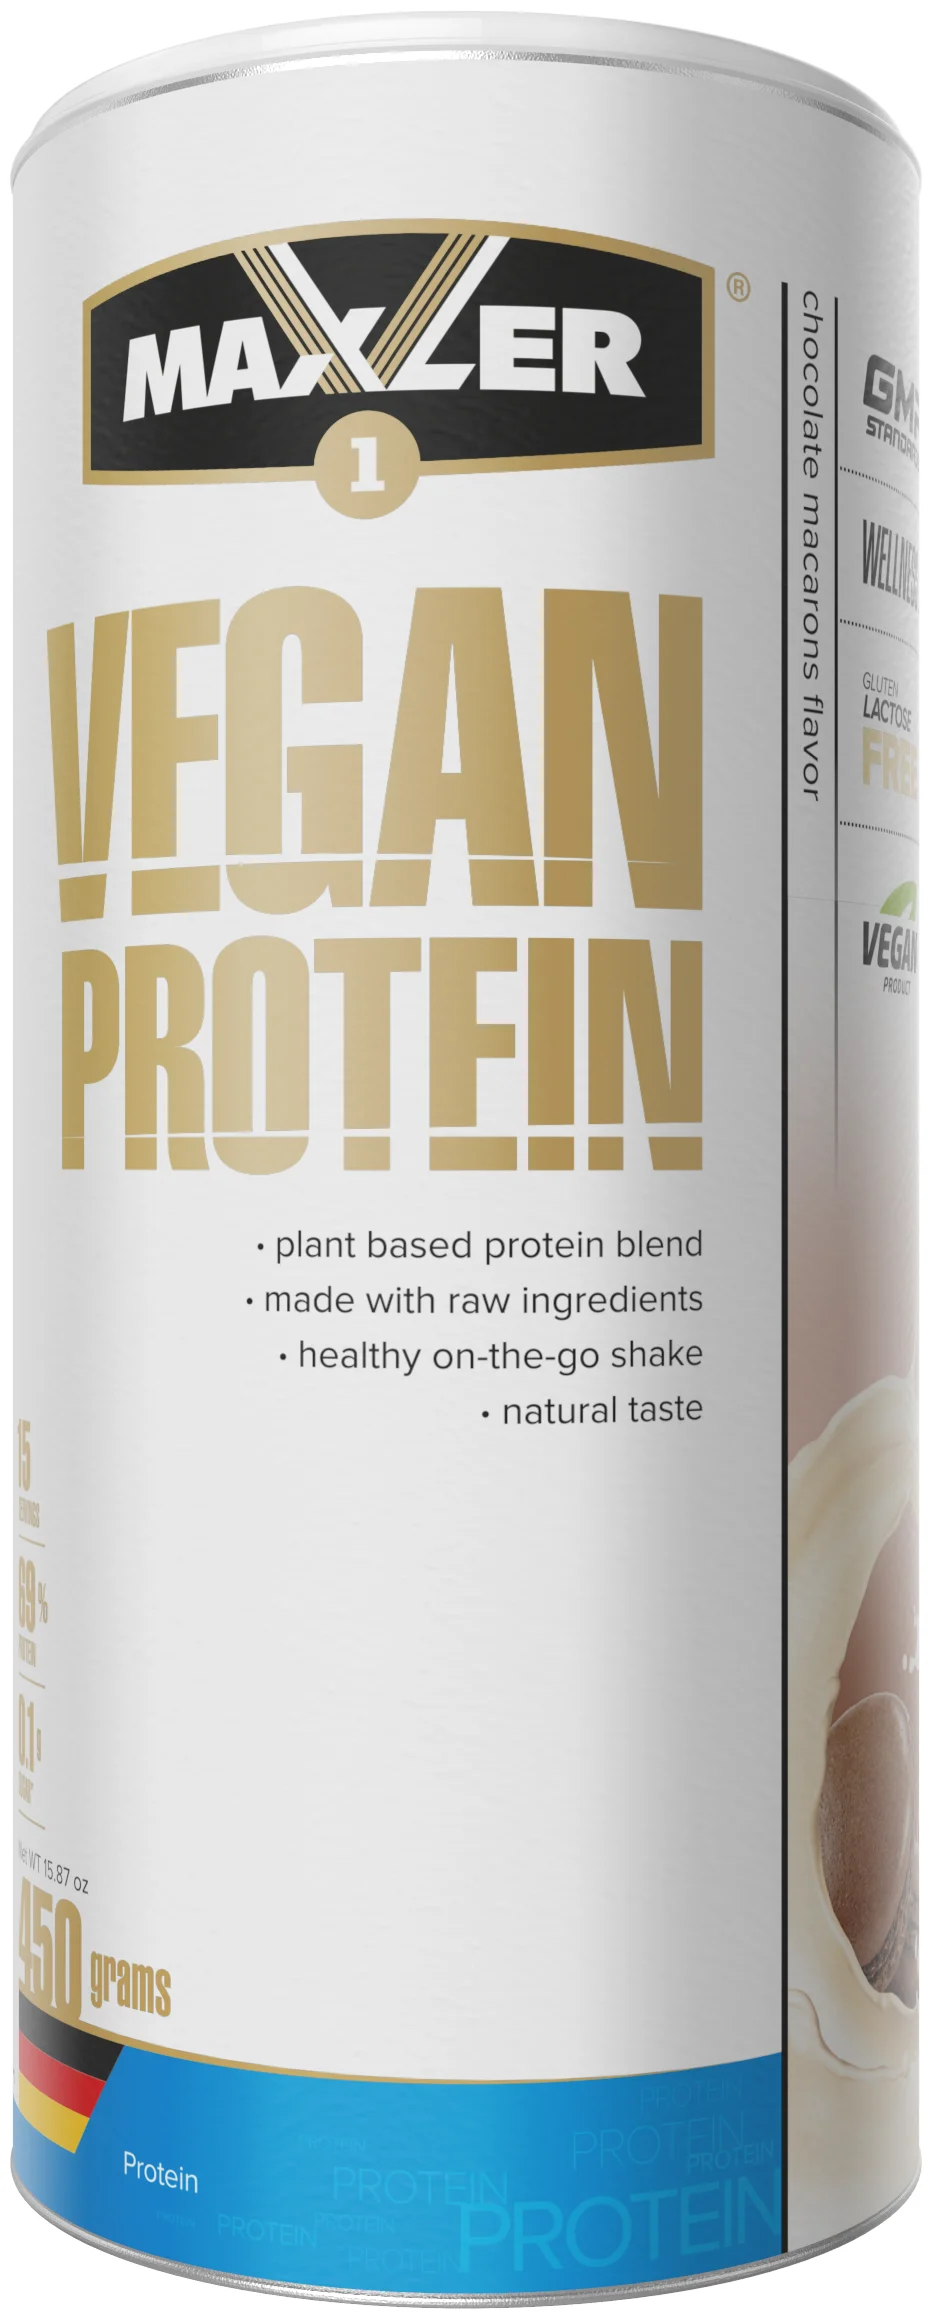 Maxler Vegan Protein - форма выпуска: порошок